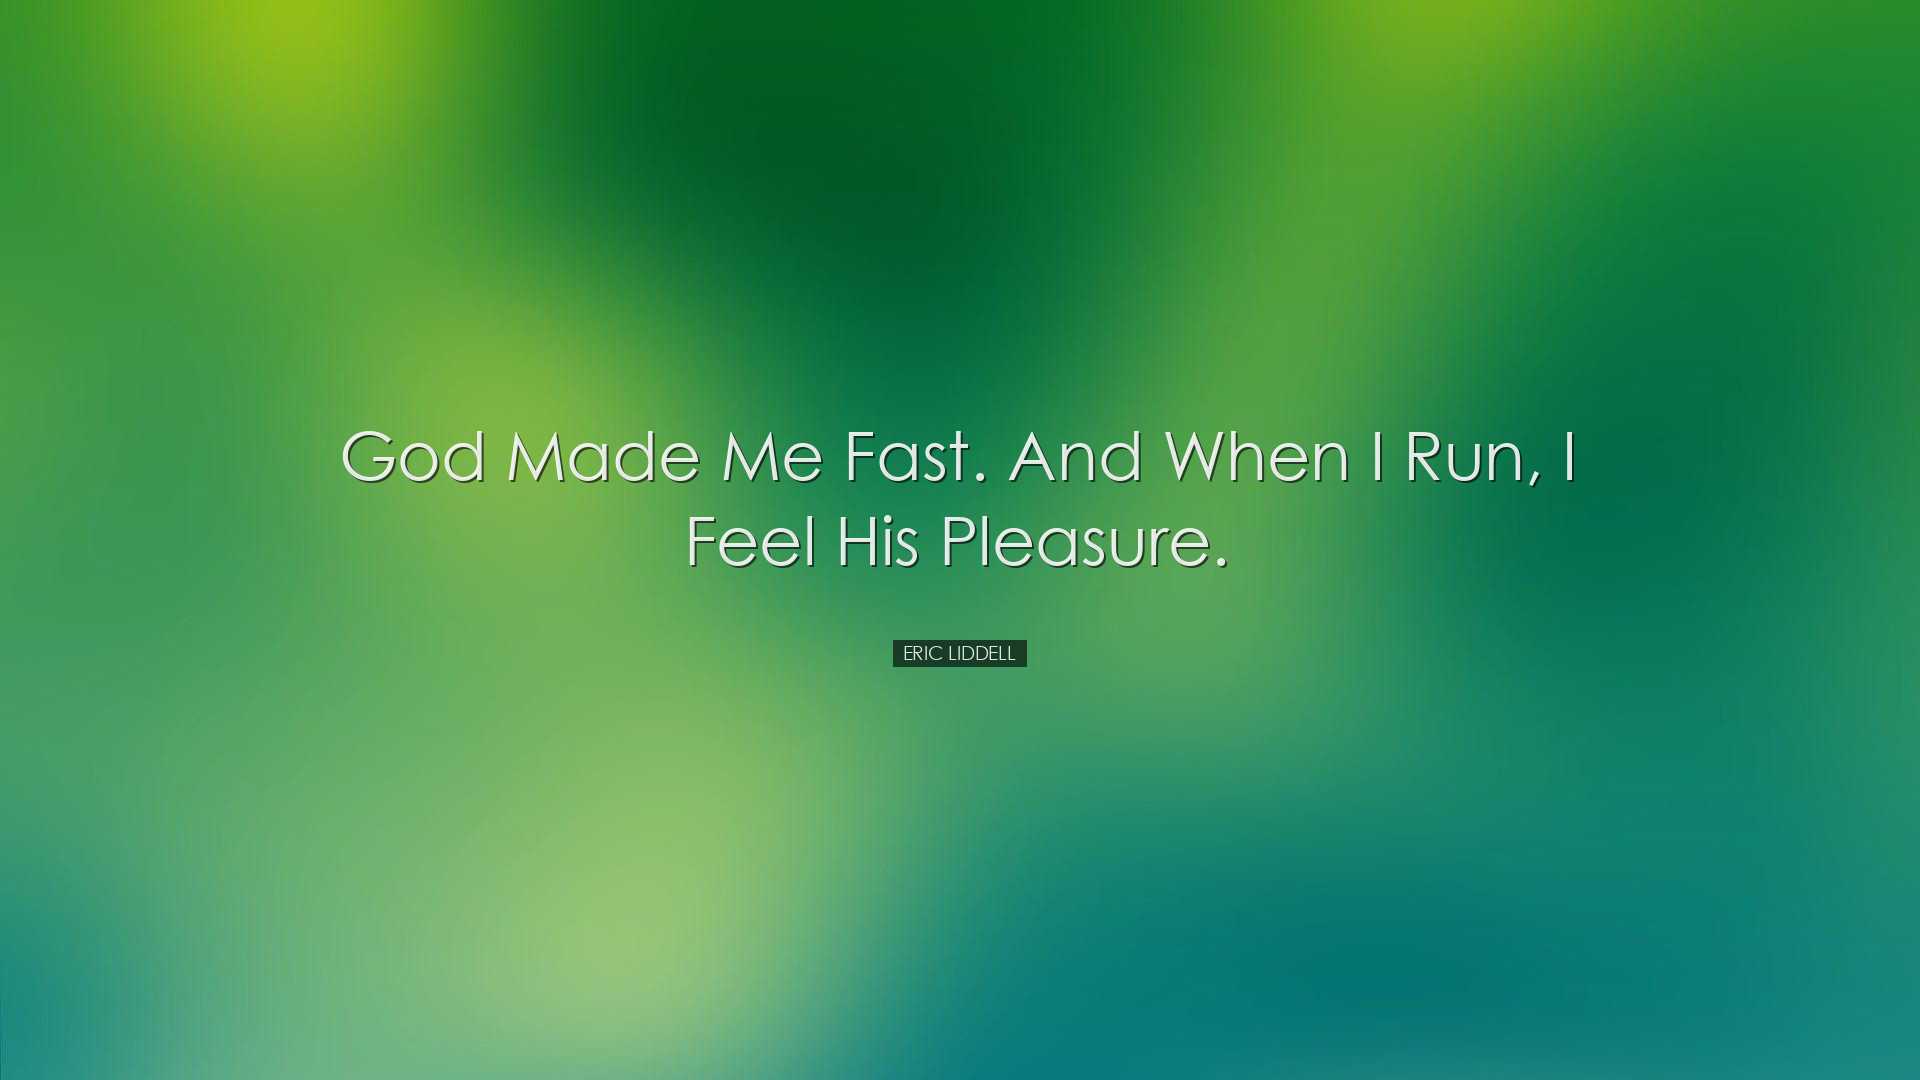 God made me fast. And when I run, I feel His pleasure. - Eric Lidd